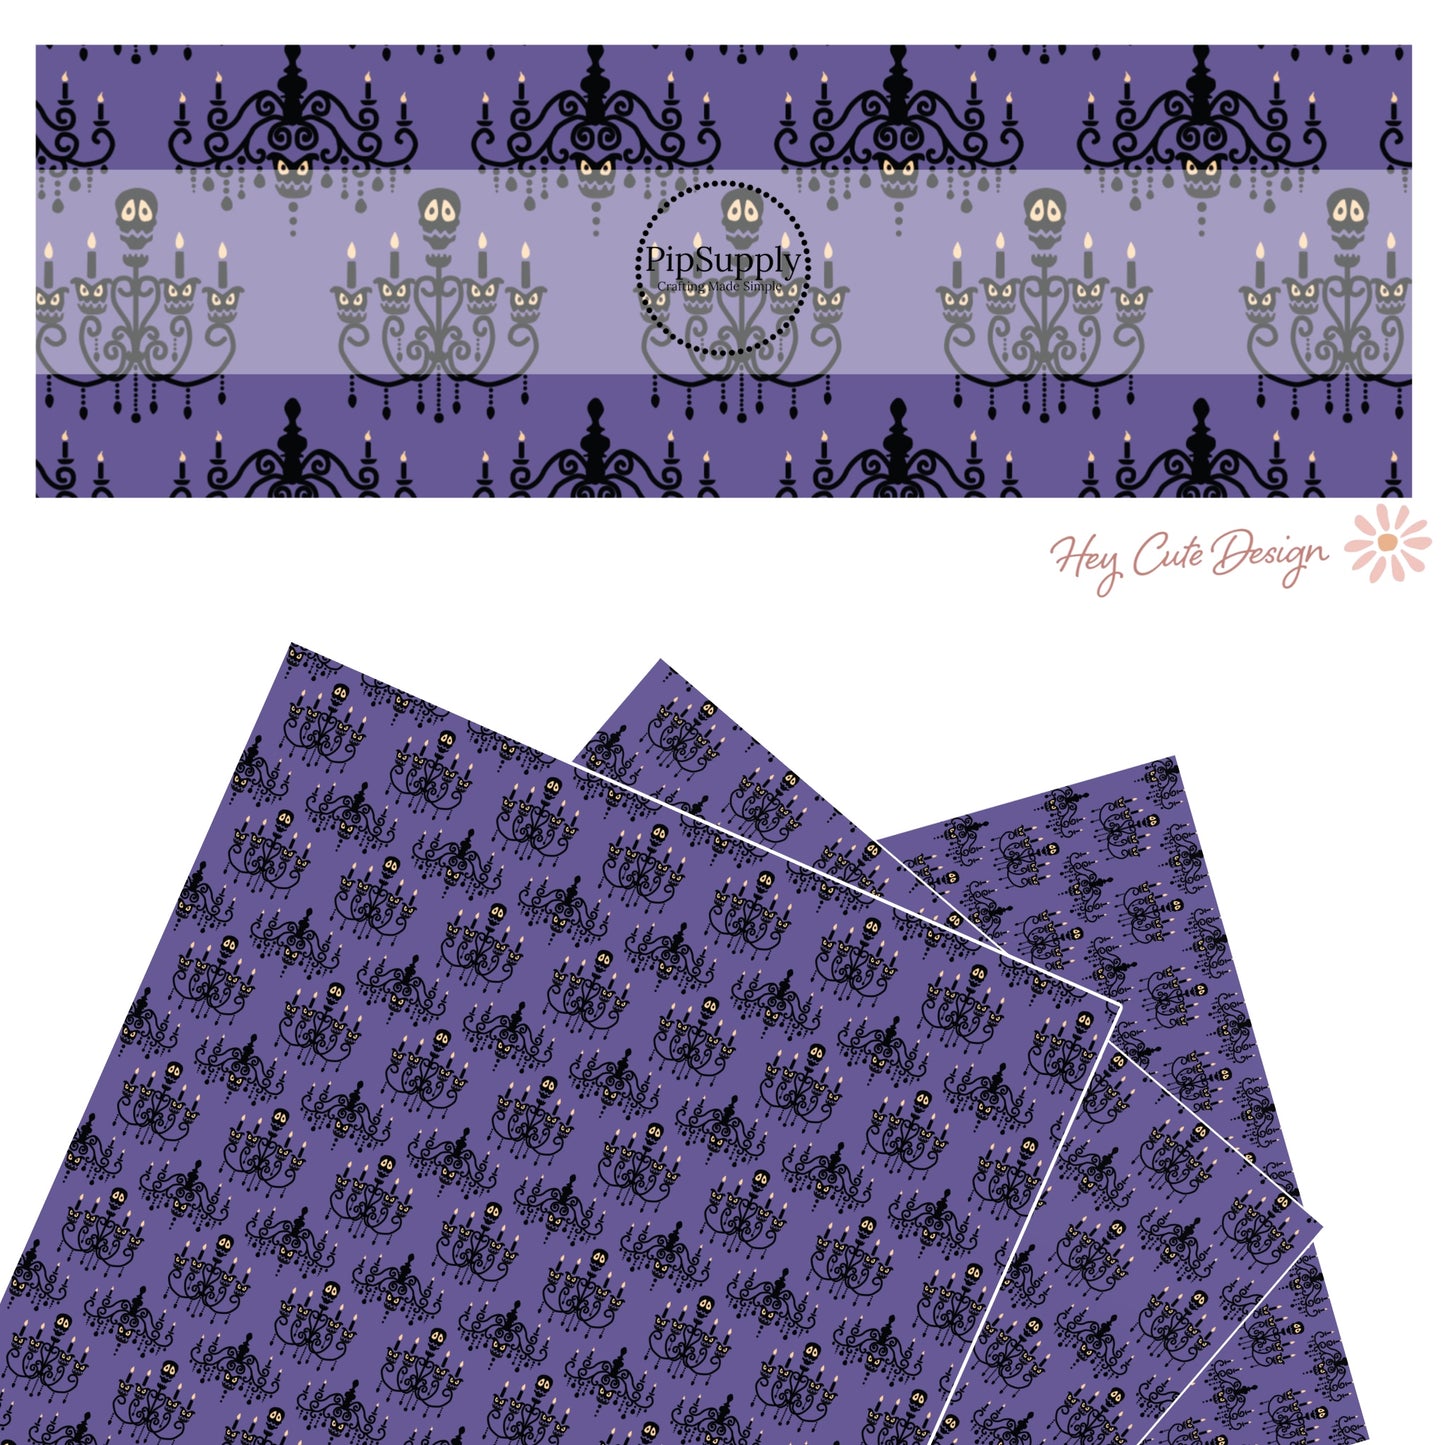 Black skeleton chandelier on purple faux leather sheets